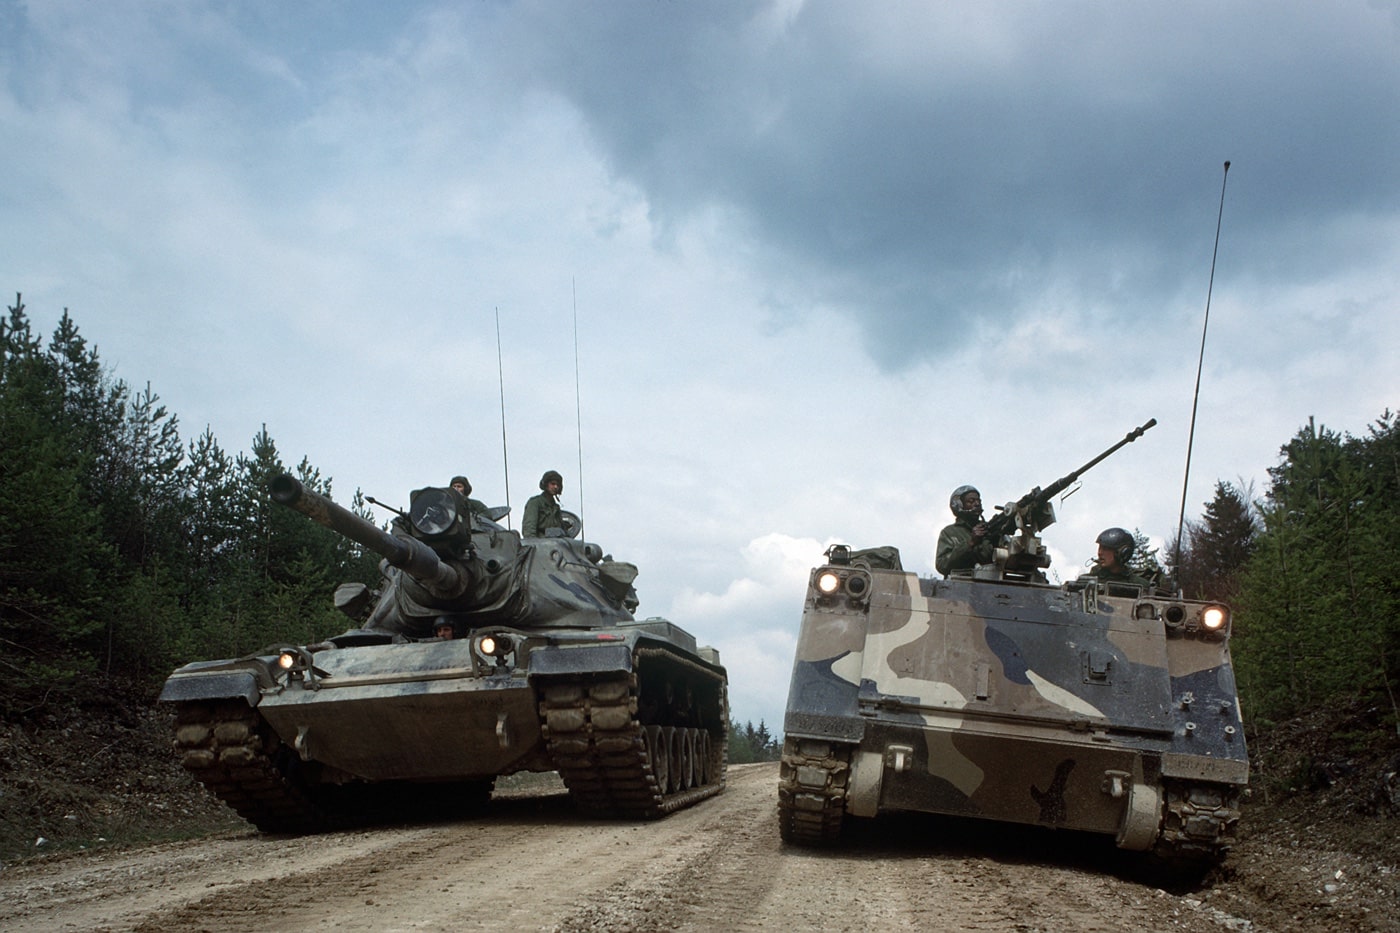 m113 apc and m60 tank